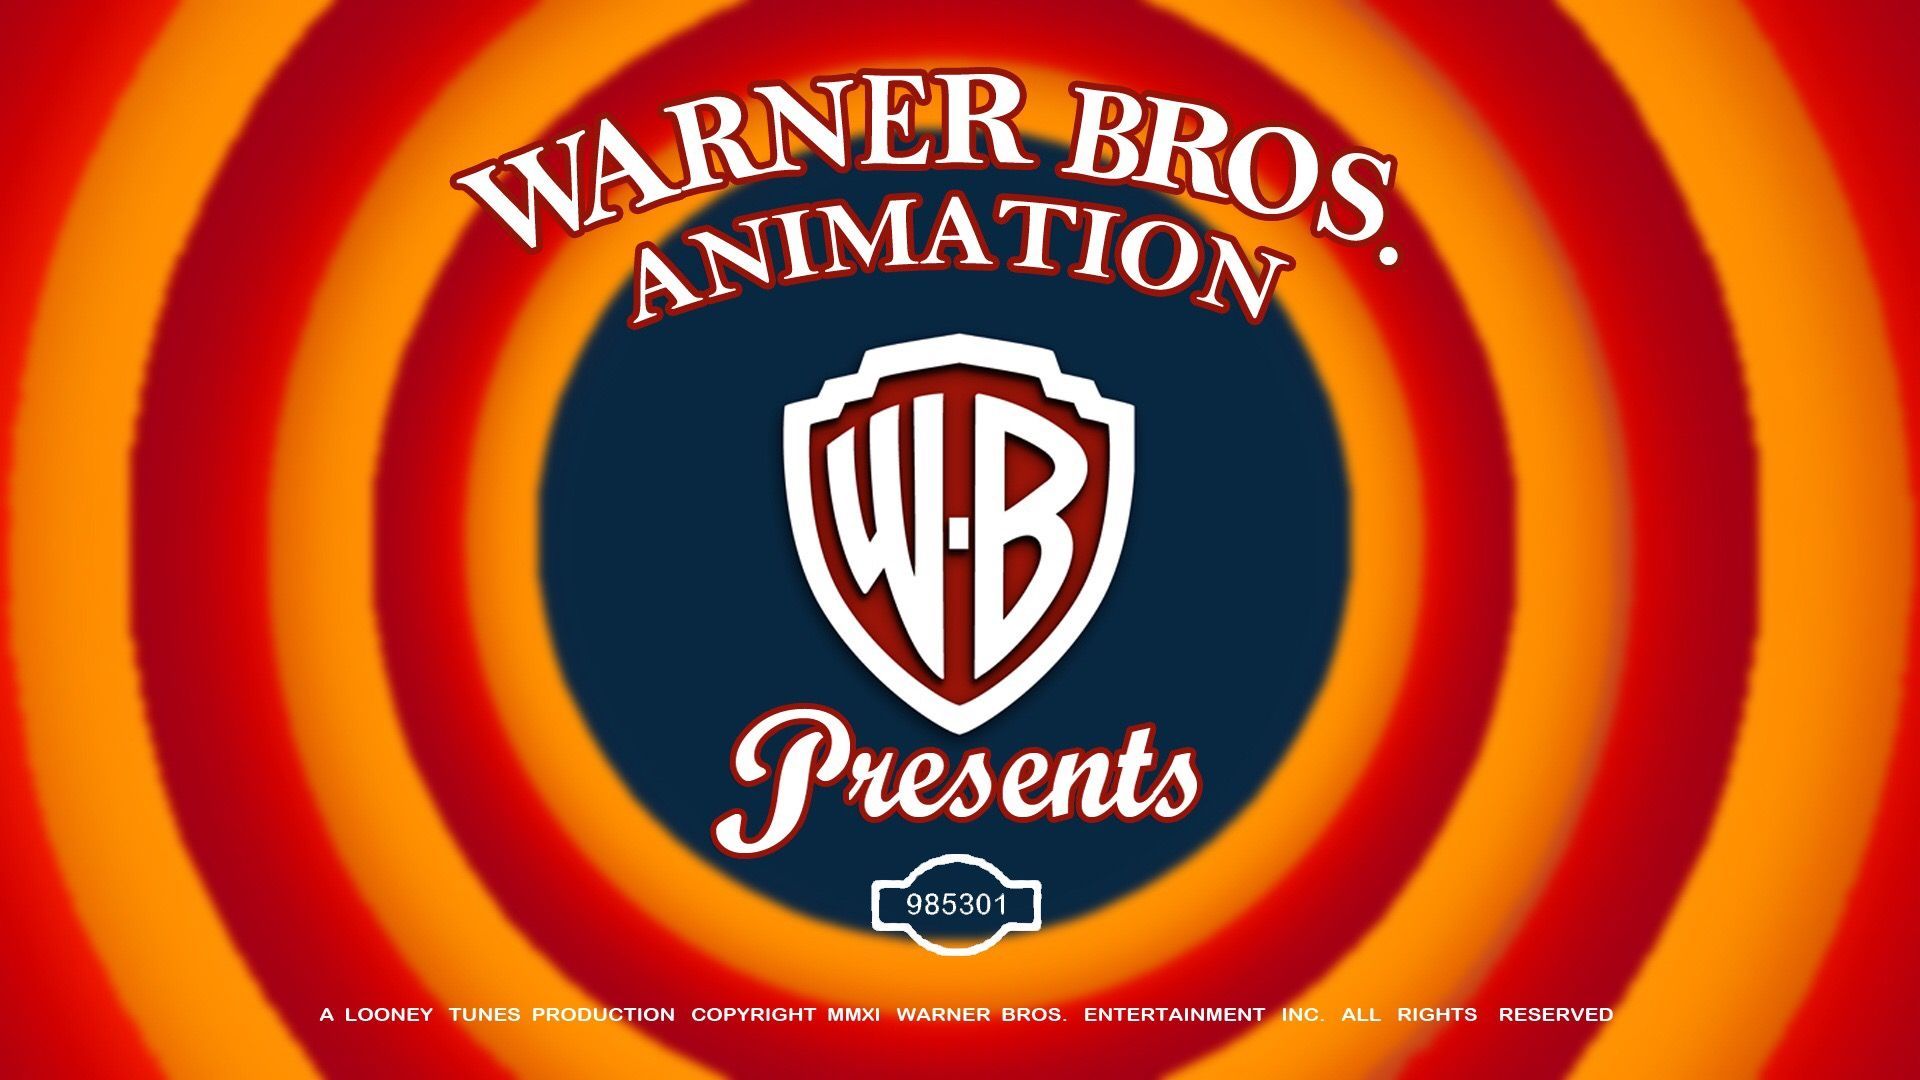 Warner Bros animation movies logo. Looney tunes cartoons, Warner bros cartoons, Looney tunes